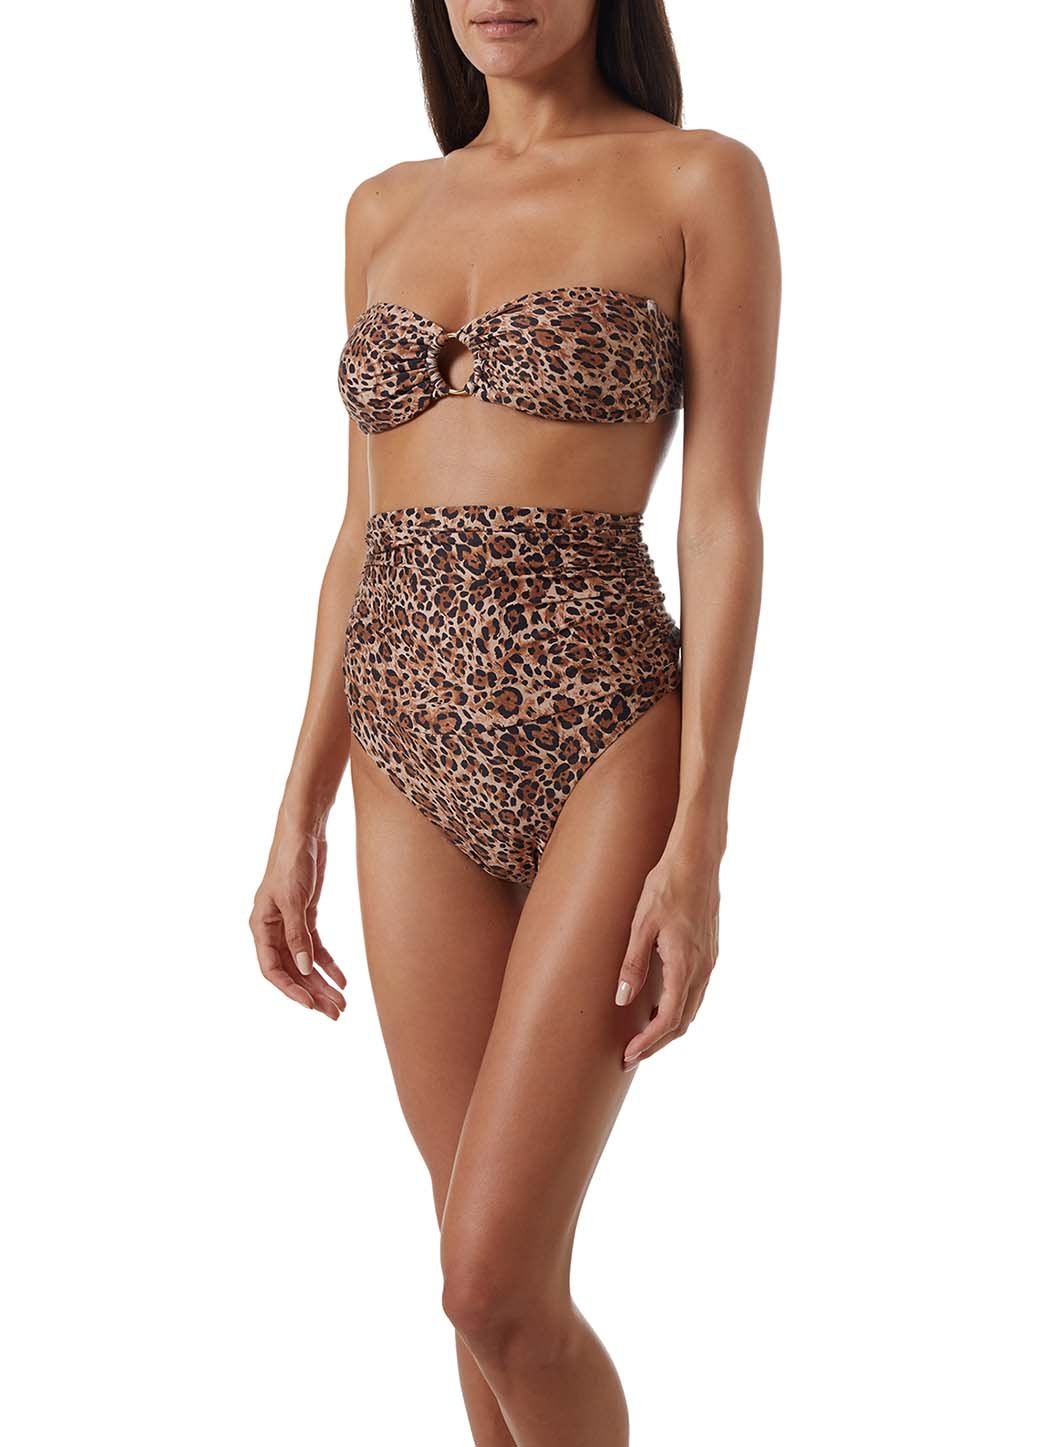 ancona-cheetah-print-high-waisted-bandeau-bikini-model_F